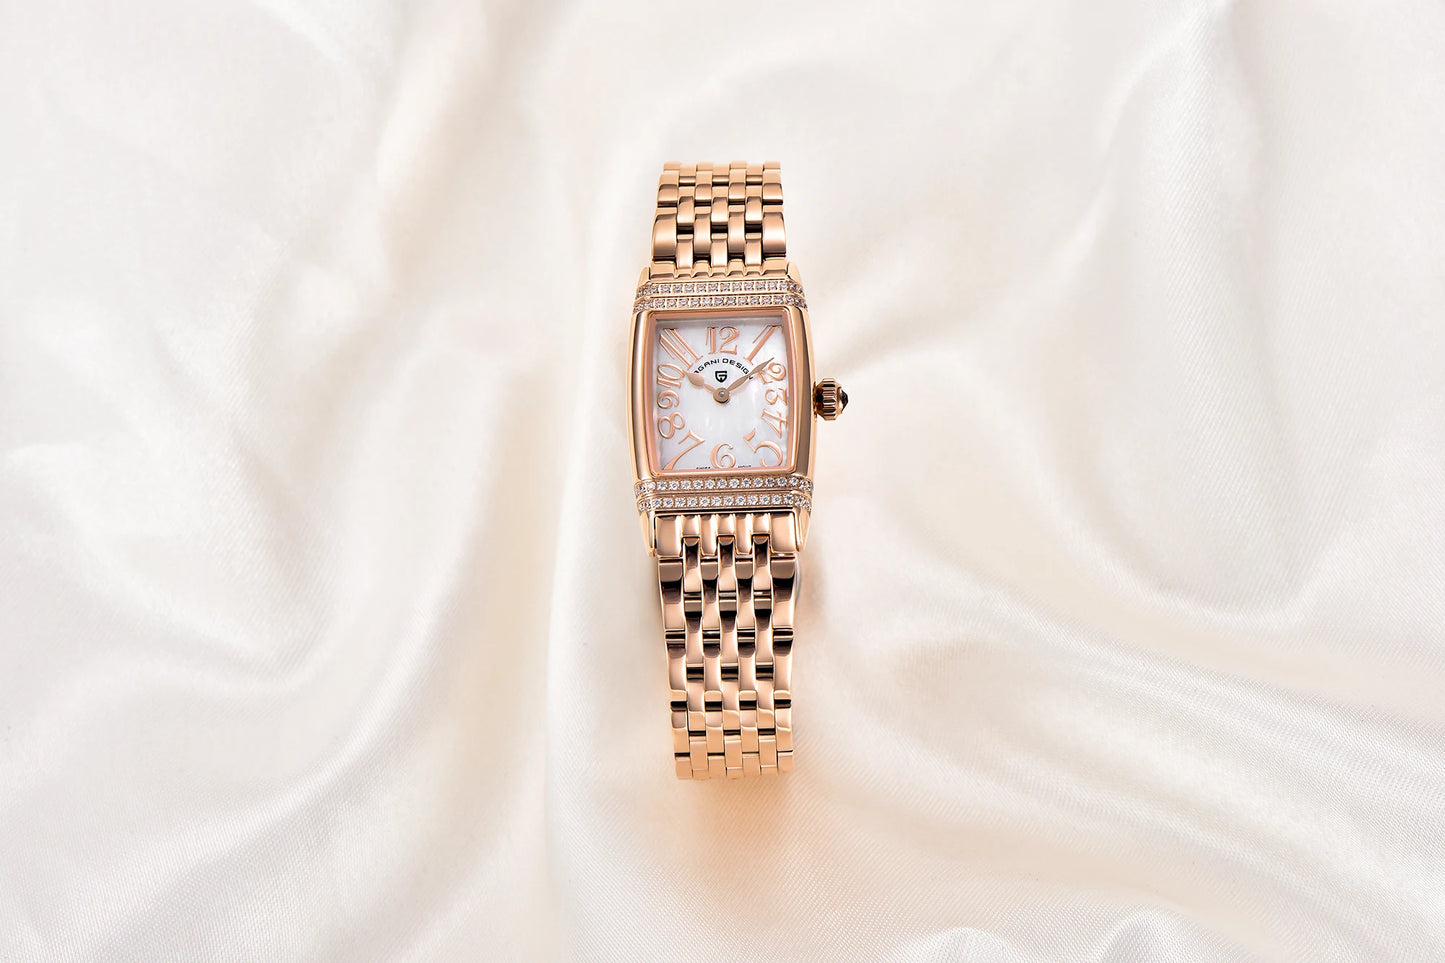 2023 NEW PAGANI DESIGN Luxury Fashion Women's Quartz Watch Sapphire Stainless Steel Waterproof Clock Holiday Gifts - Sellinashop